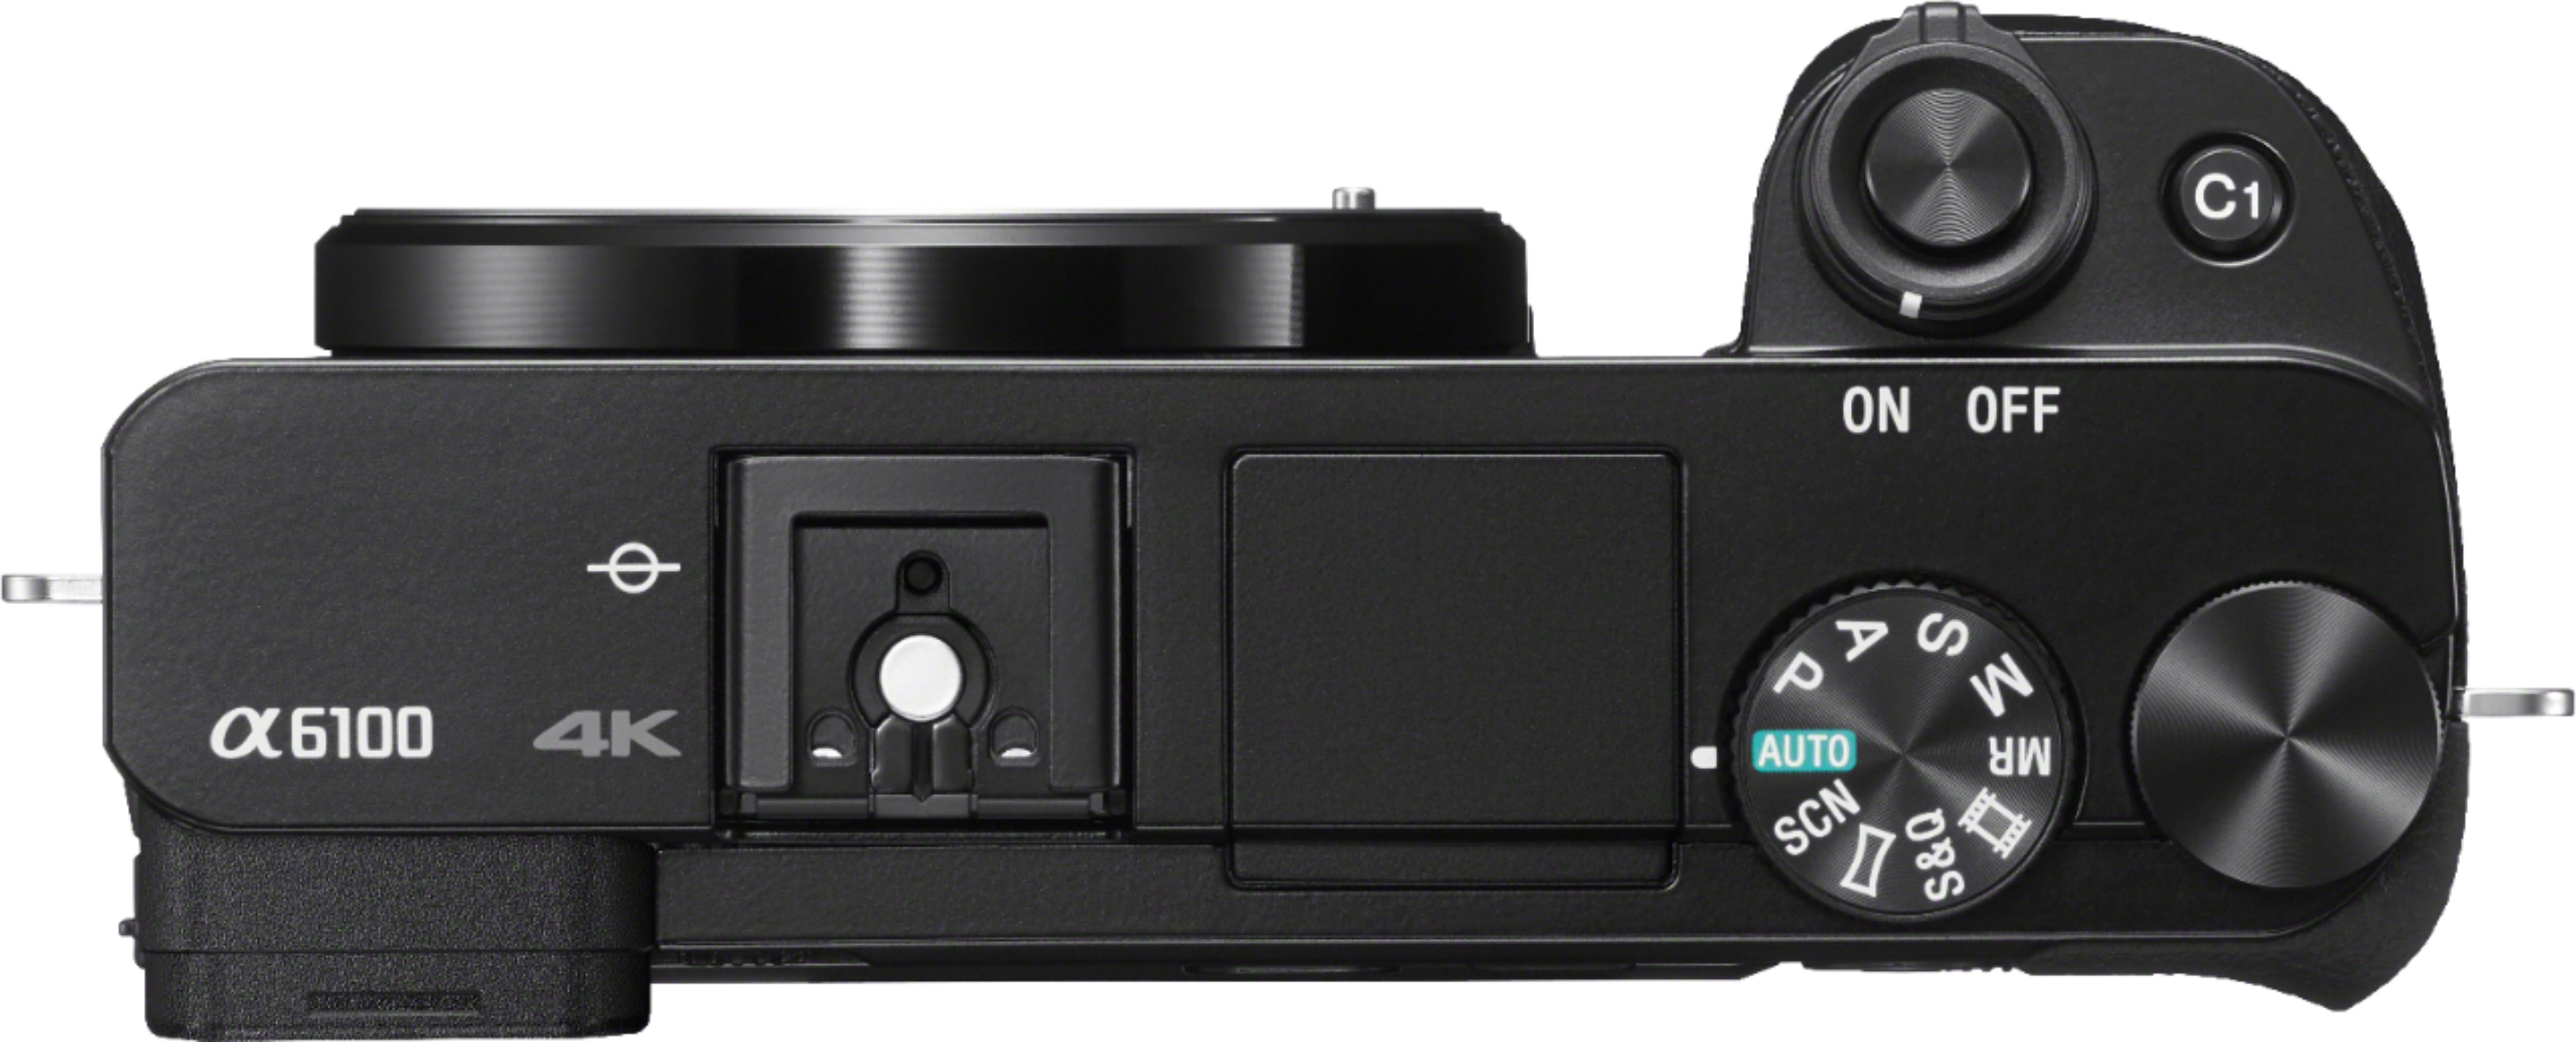 SONY a6100 Alpha ILCE-6100 Mirrorless Digital Camera Body from